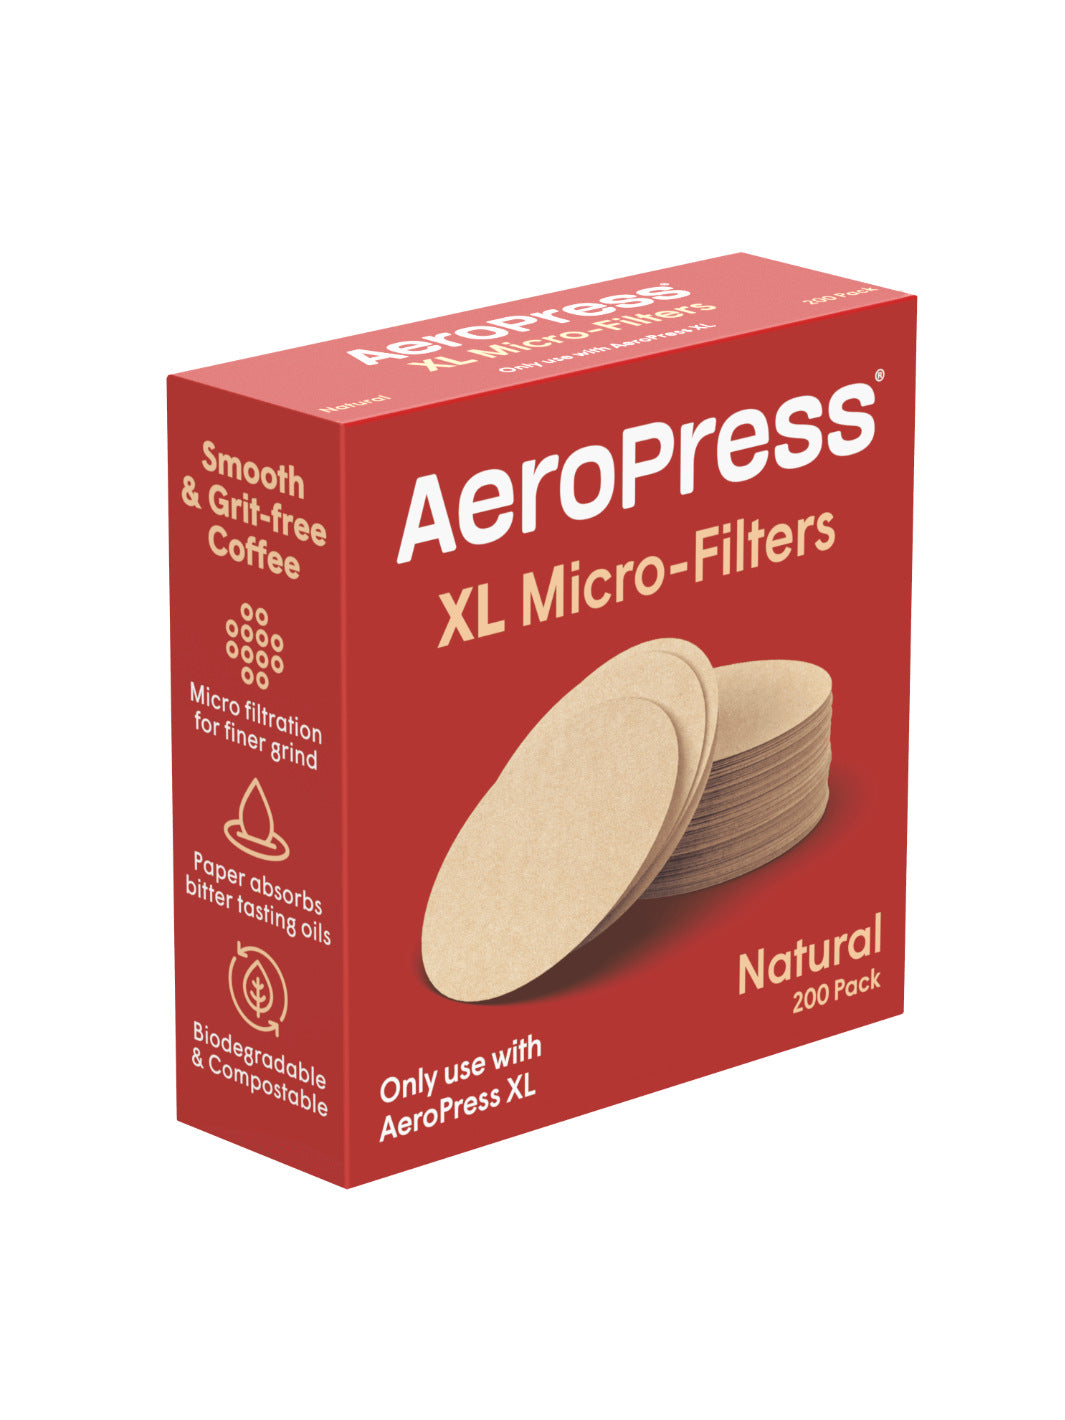 AeroPress XL Natural Microfilters (200-Pack)